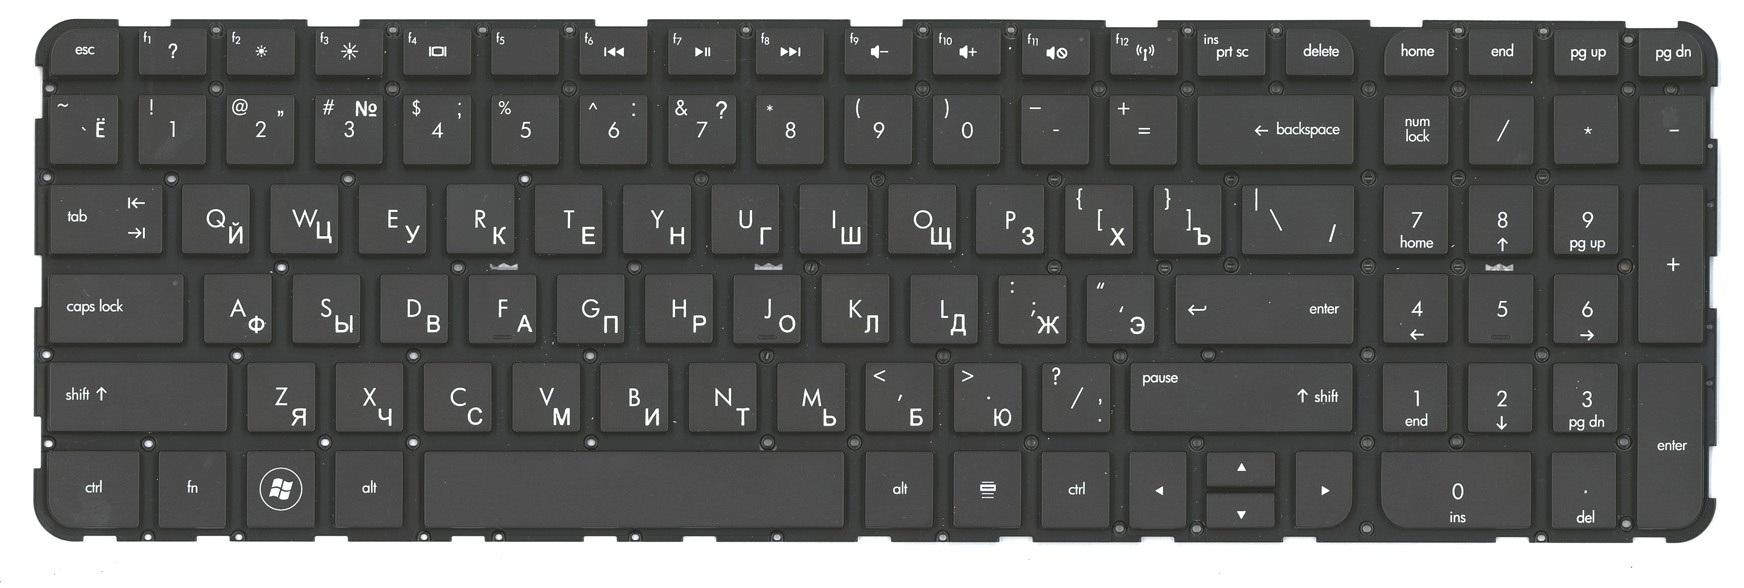 клавиатура русская фото клавиш